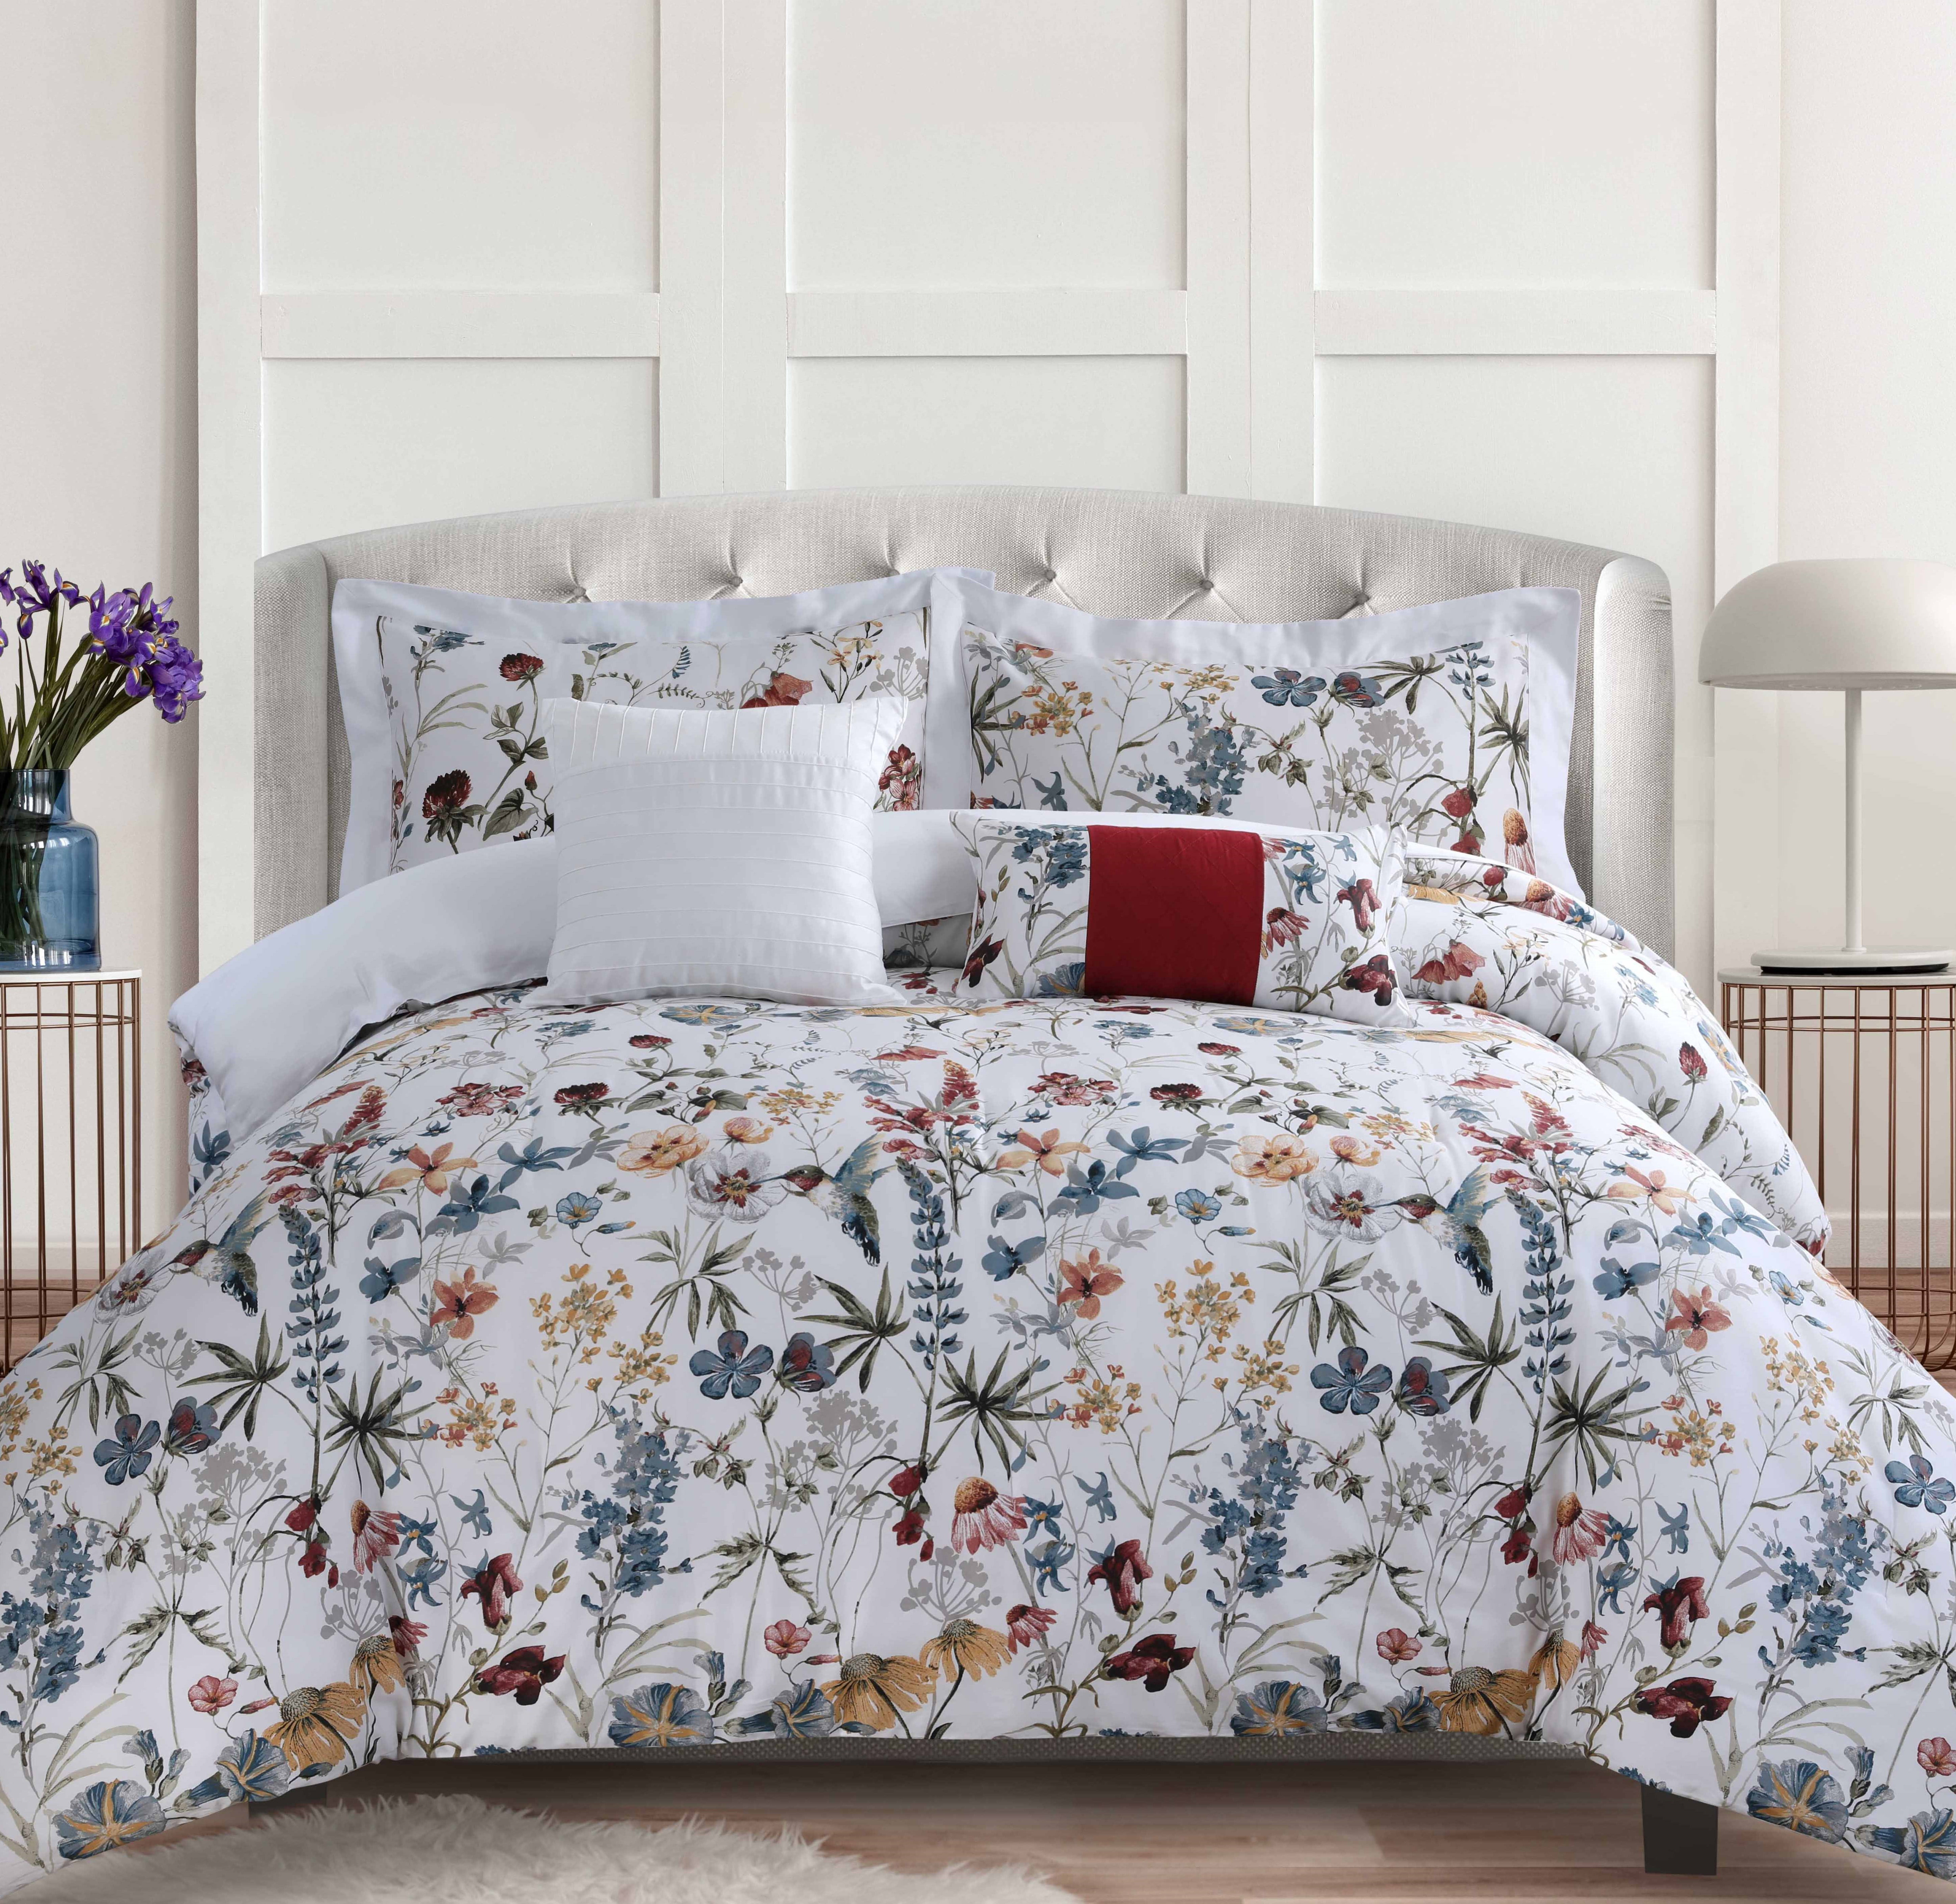 300 Thread Count Floral Bird Print Duvet Cover Quilt Bedding Set With Pillowcase 